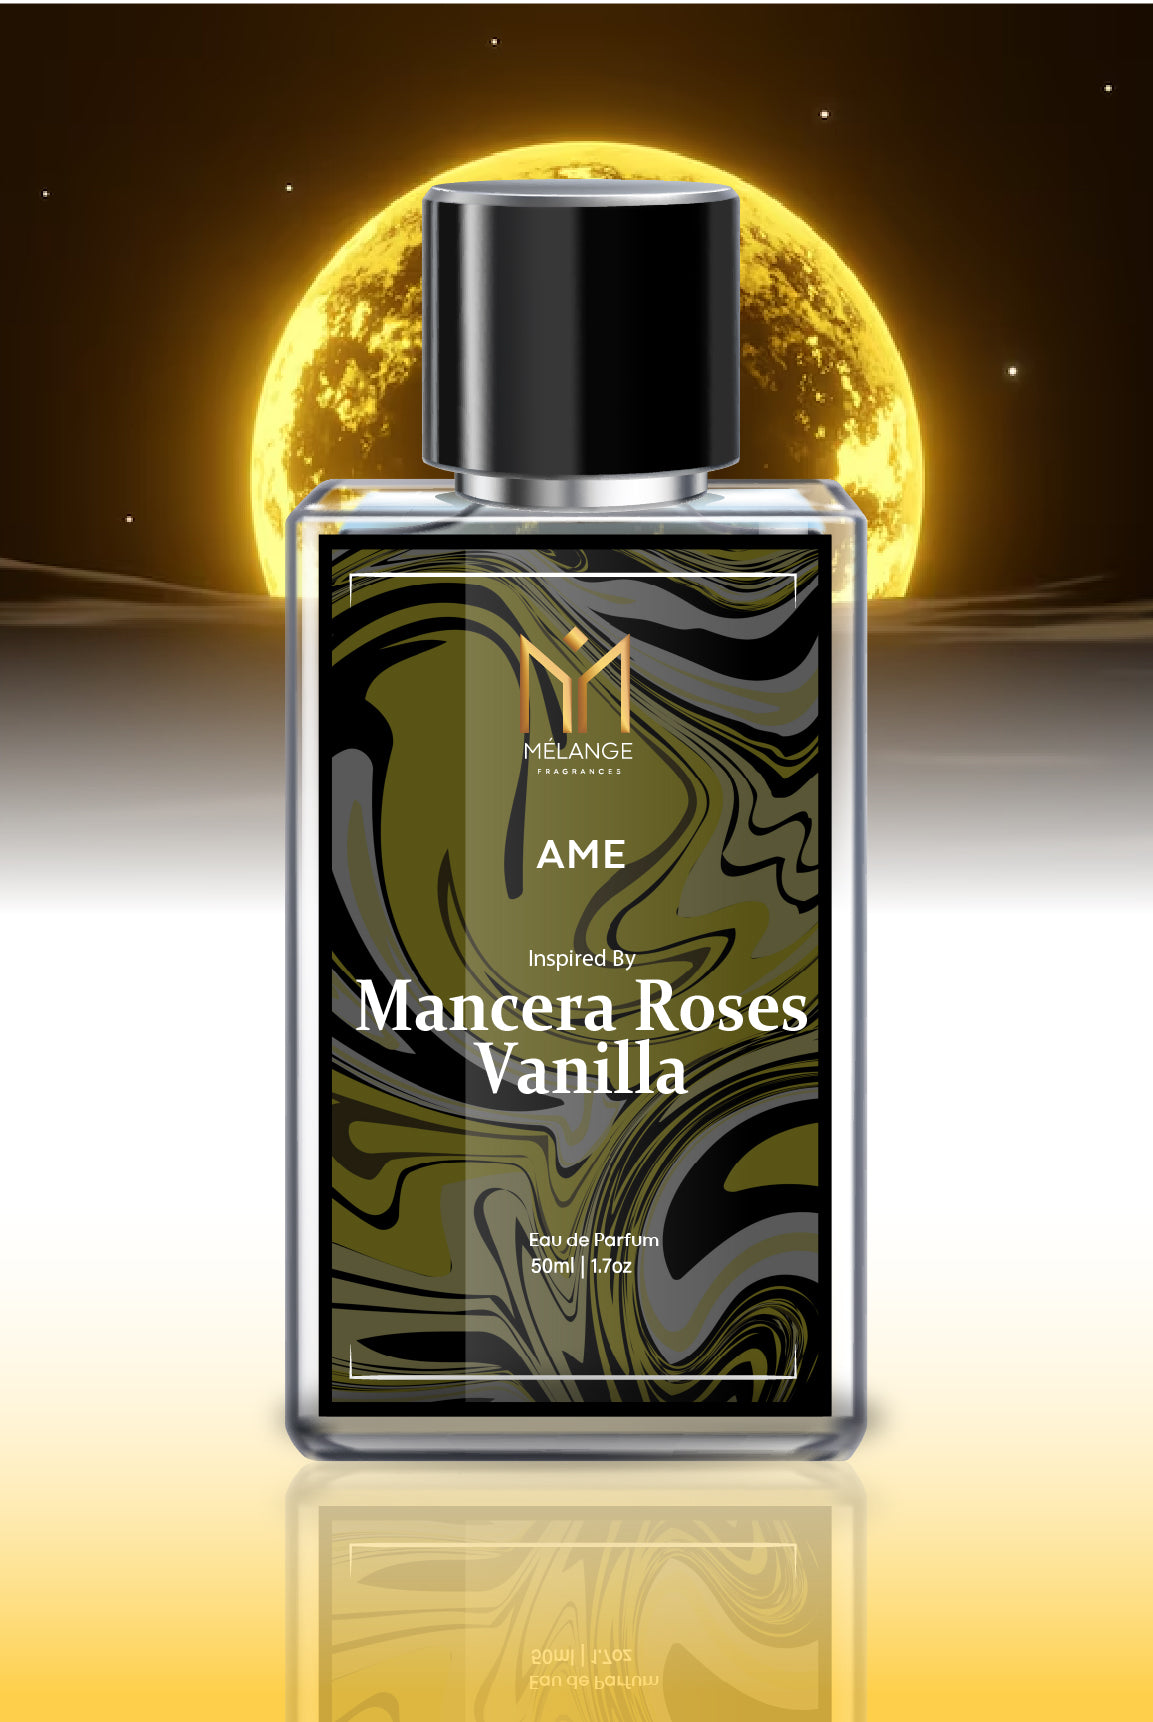 AME- Inspired By Mancera Roses Vanilla